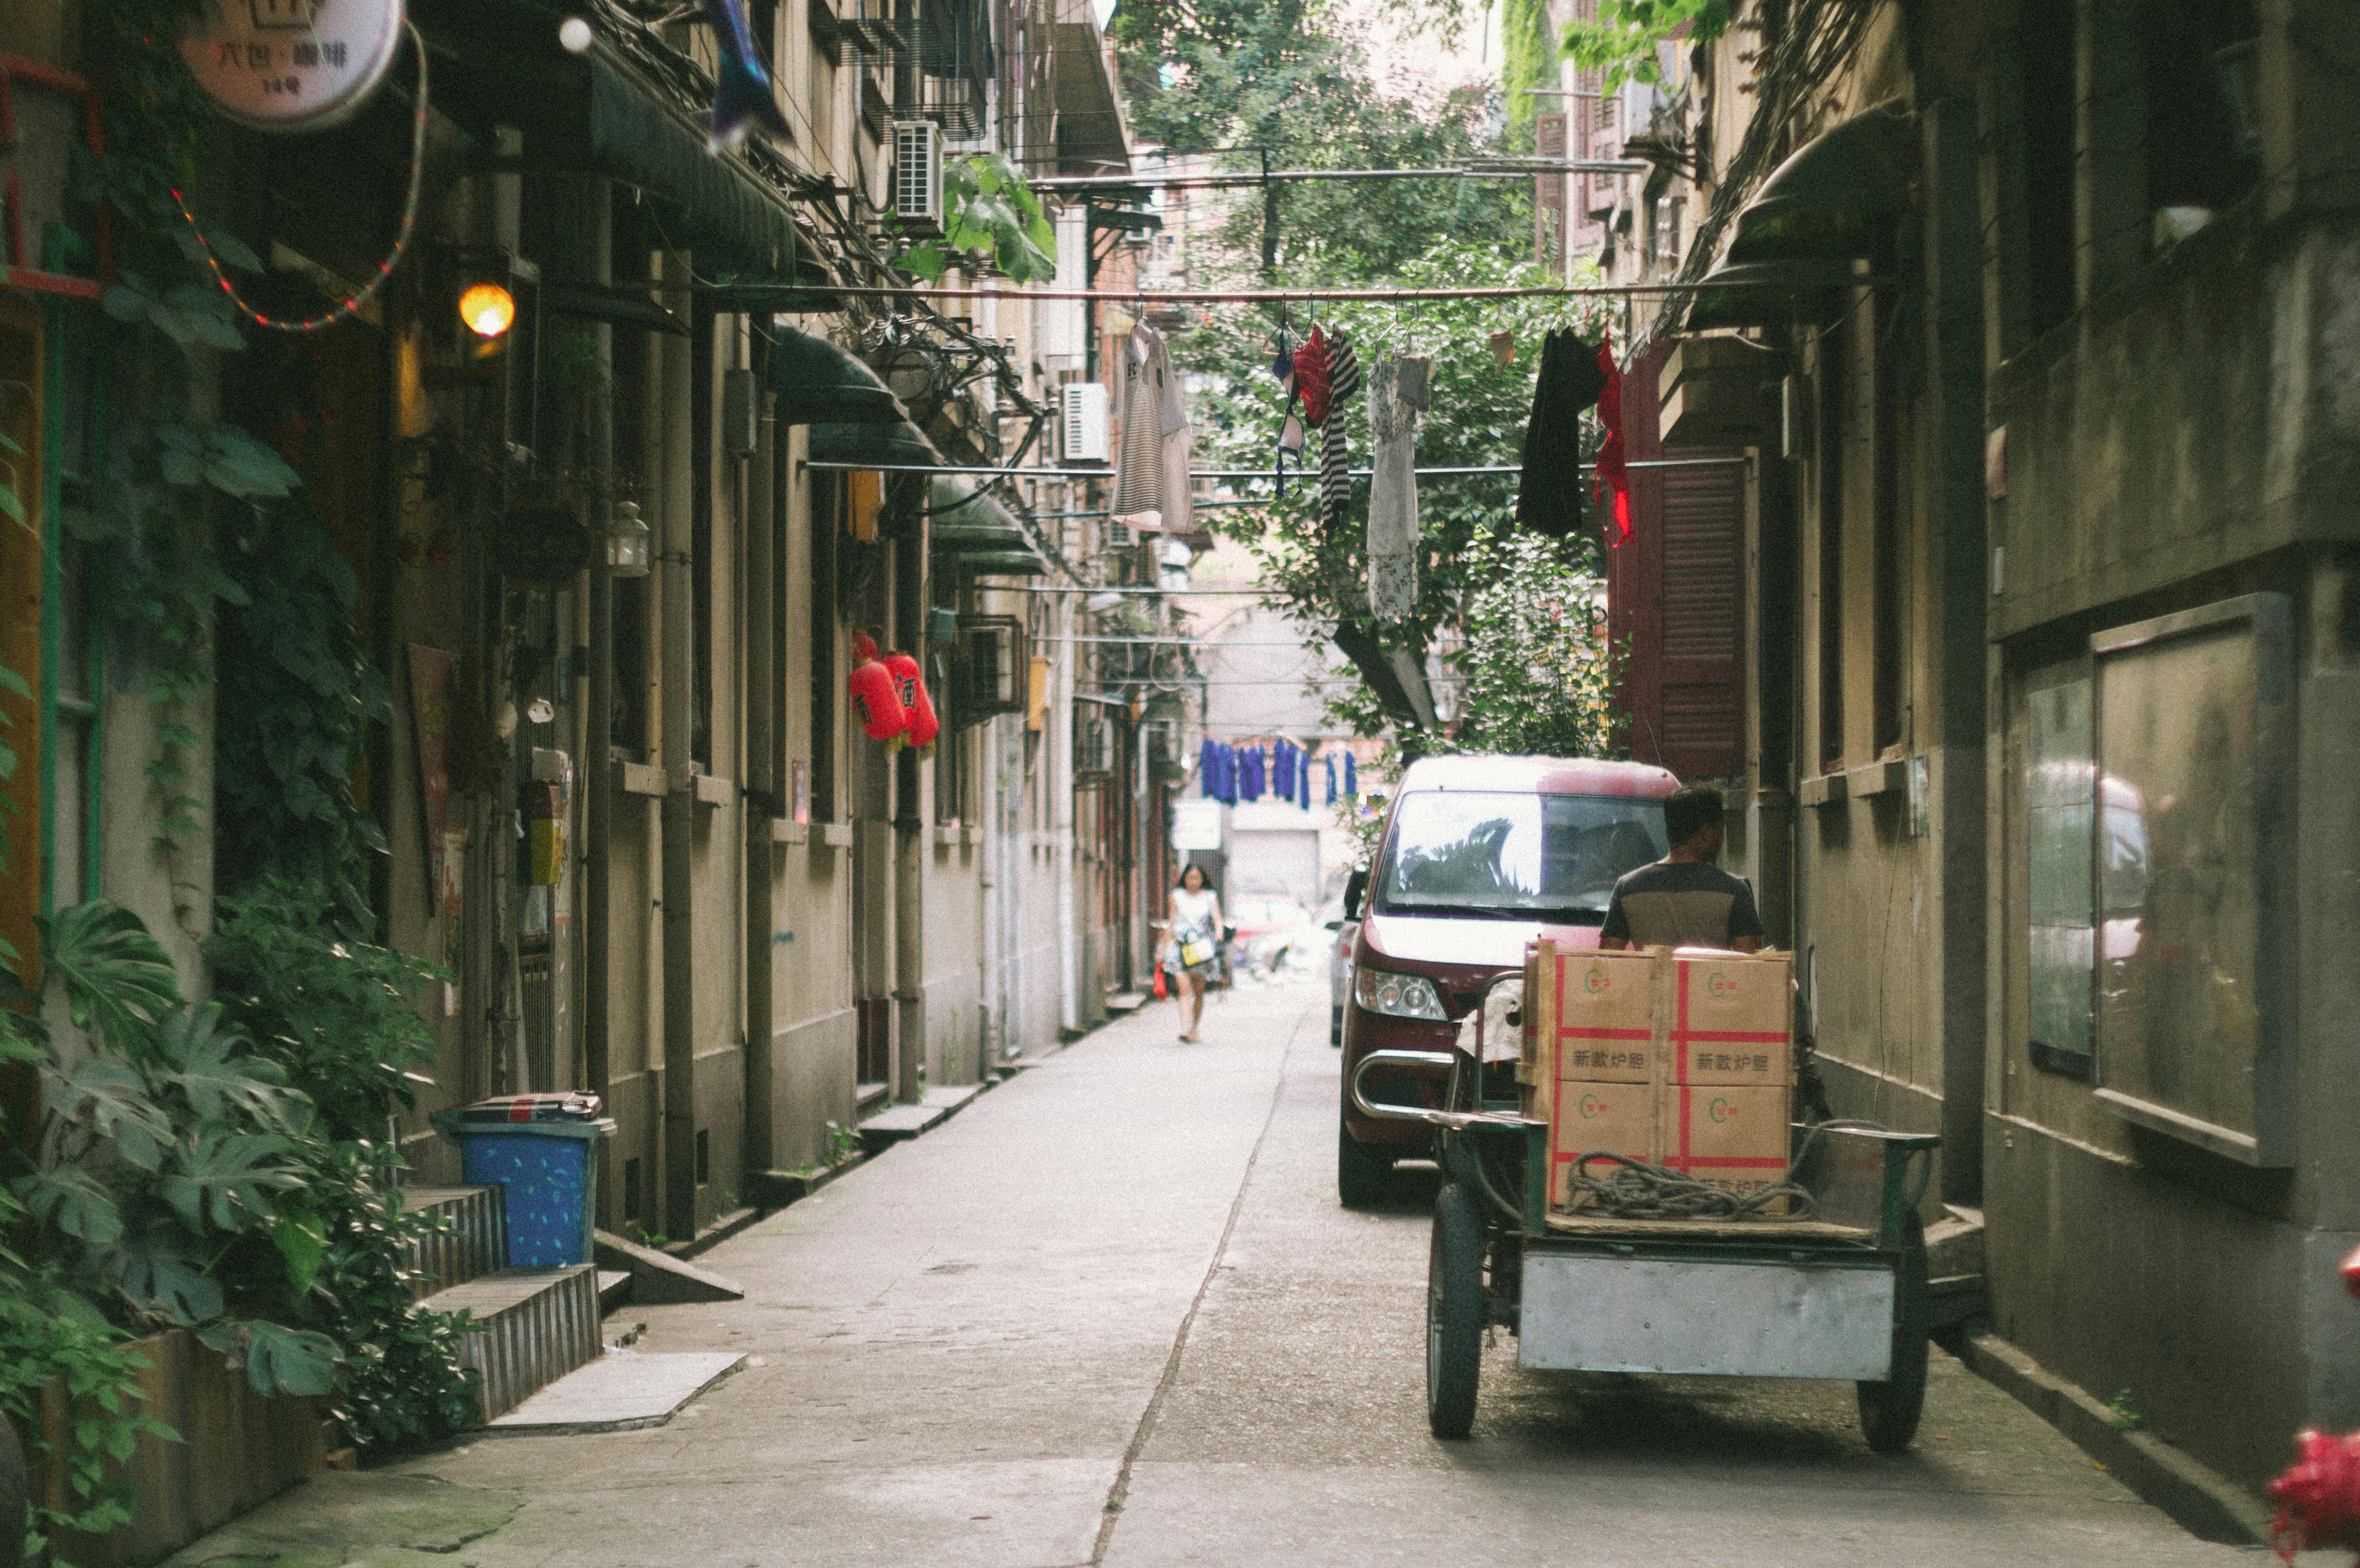 an alley between buildings in asia